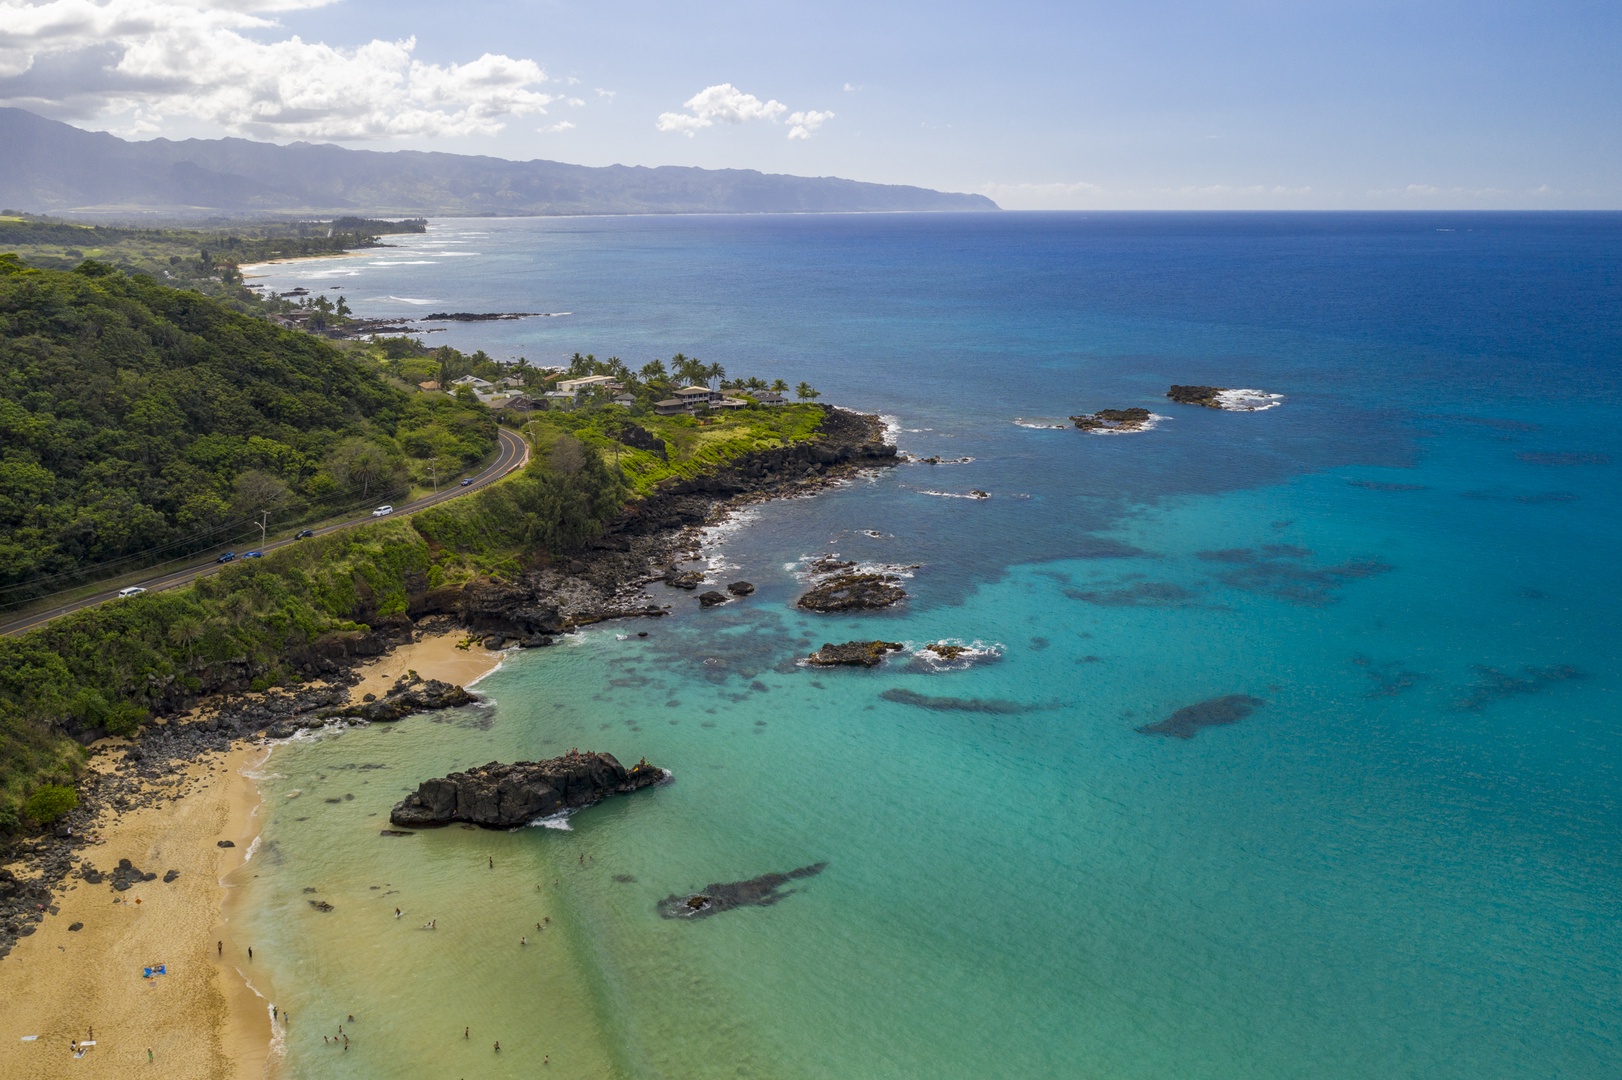 Turtle etc Modern Postcard Visit Maui Hawaii The Mermaid Capital of the World 